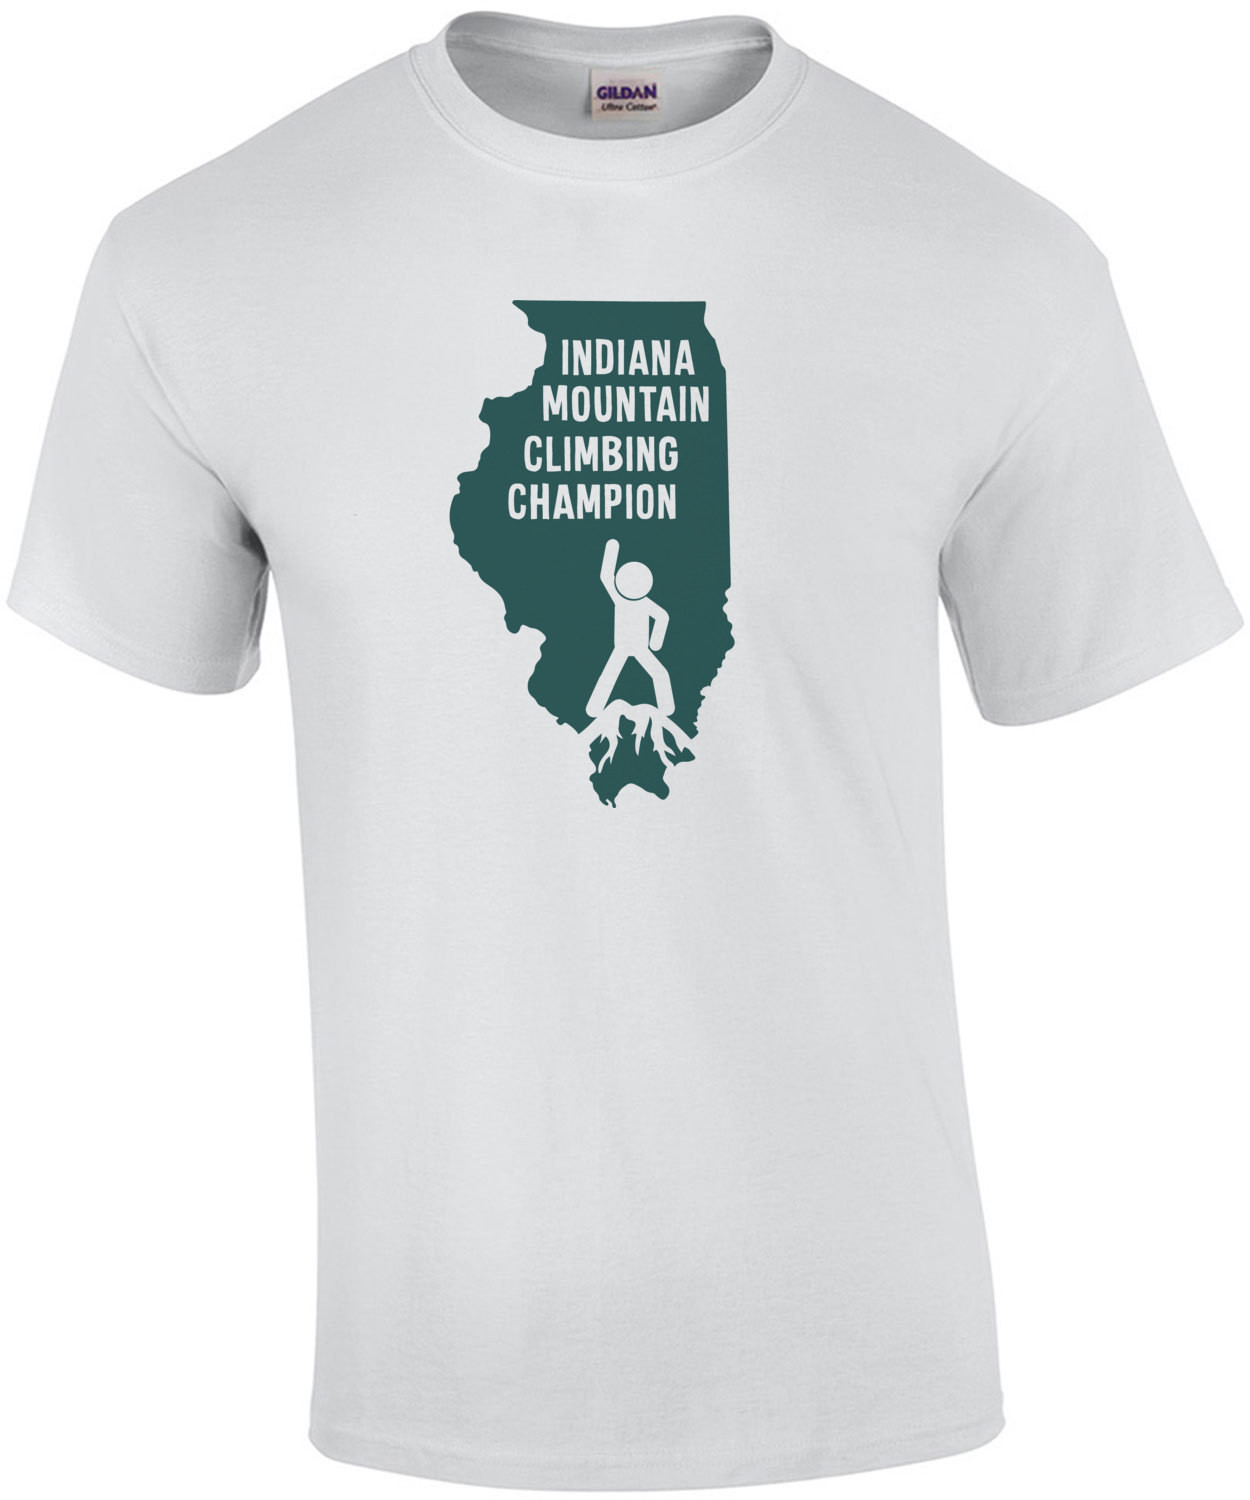 Indiana Mountain Climbing Champion - Indiana T-Shirt